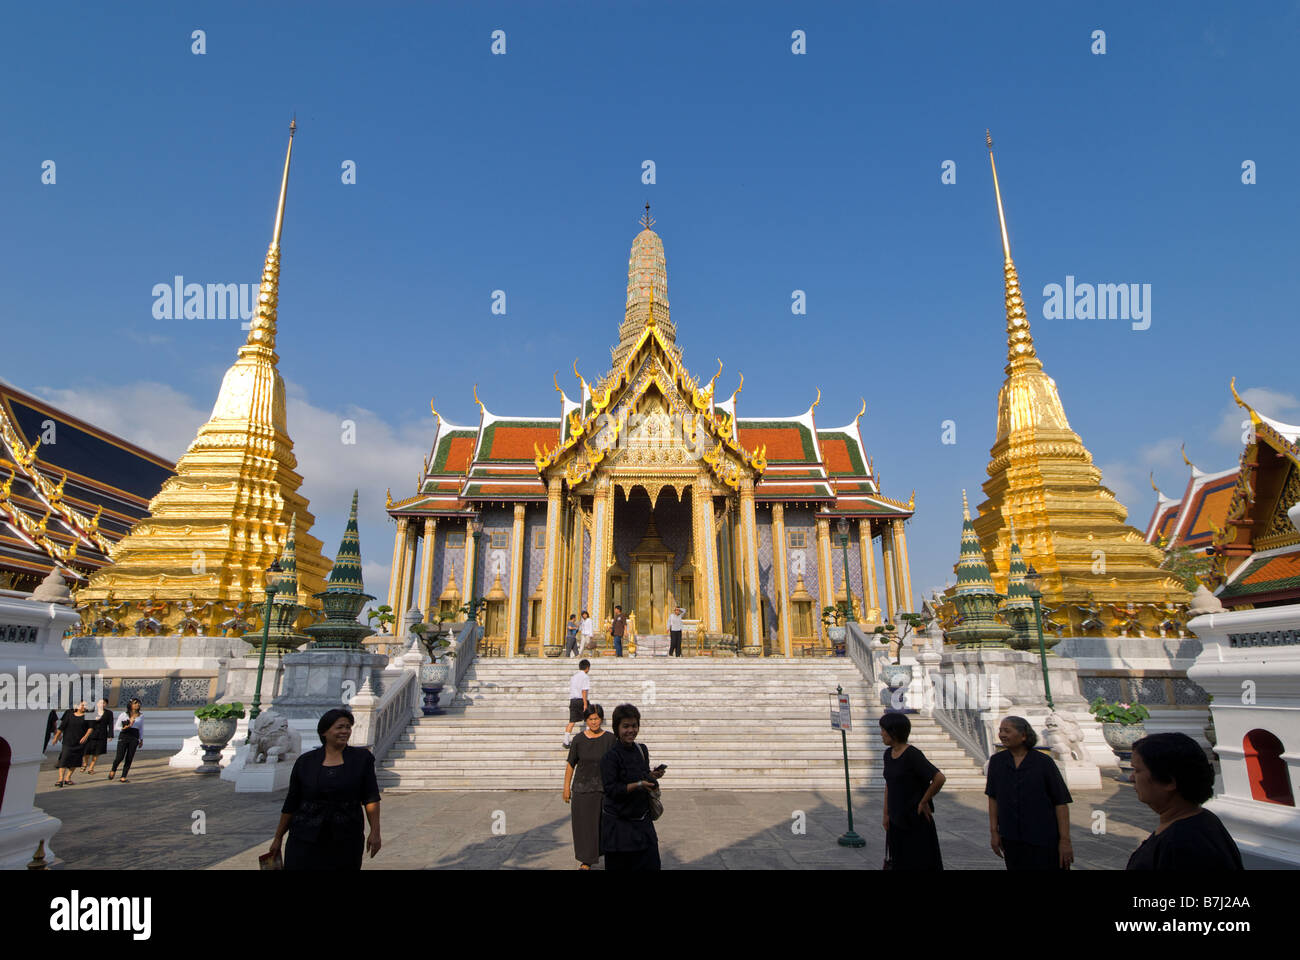 Das Royal Pantheon Gebäude - Wat Phra Kaew und dem Grand Palace in Bangkok Zentralthailand Stockfoto